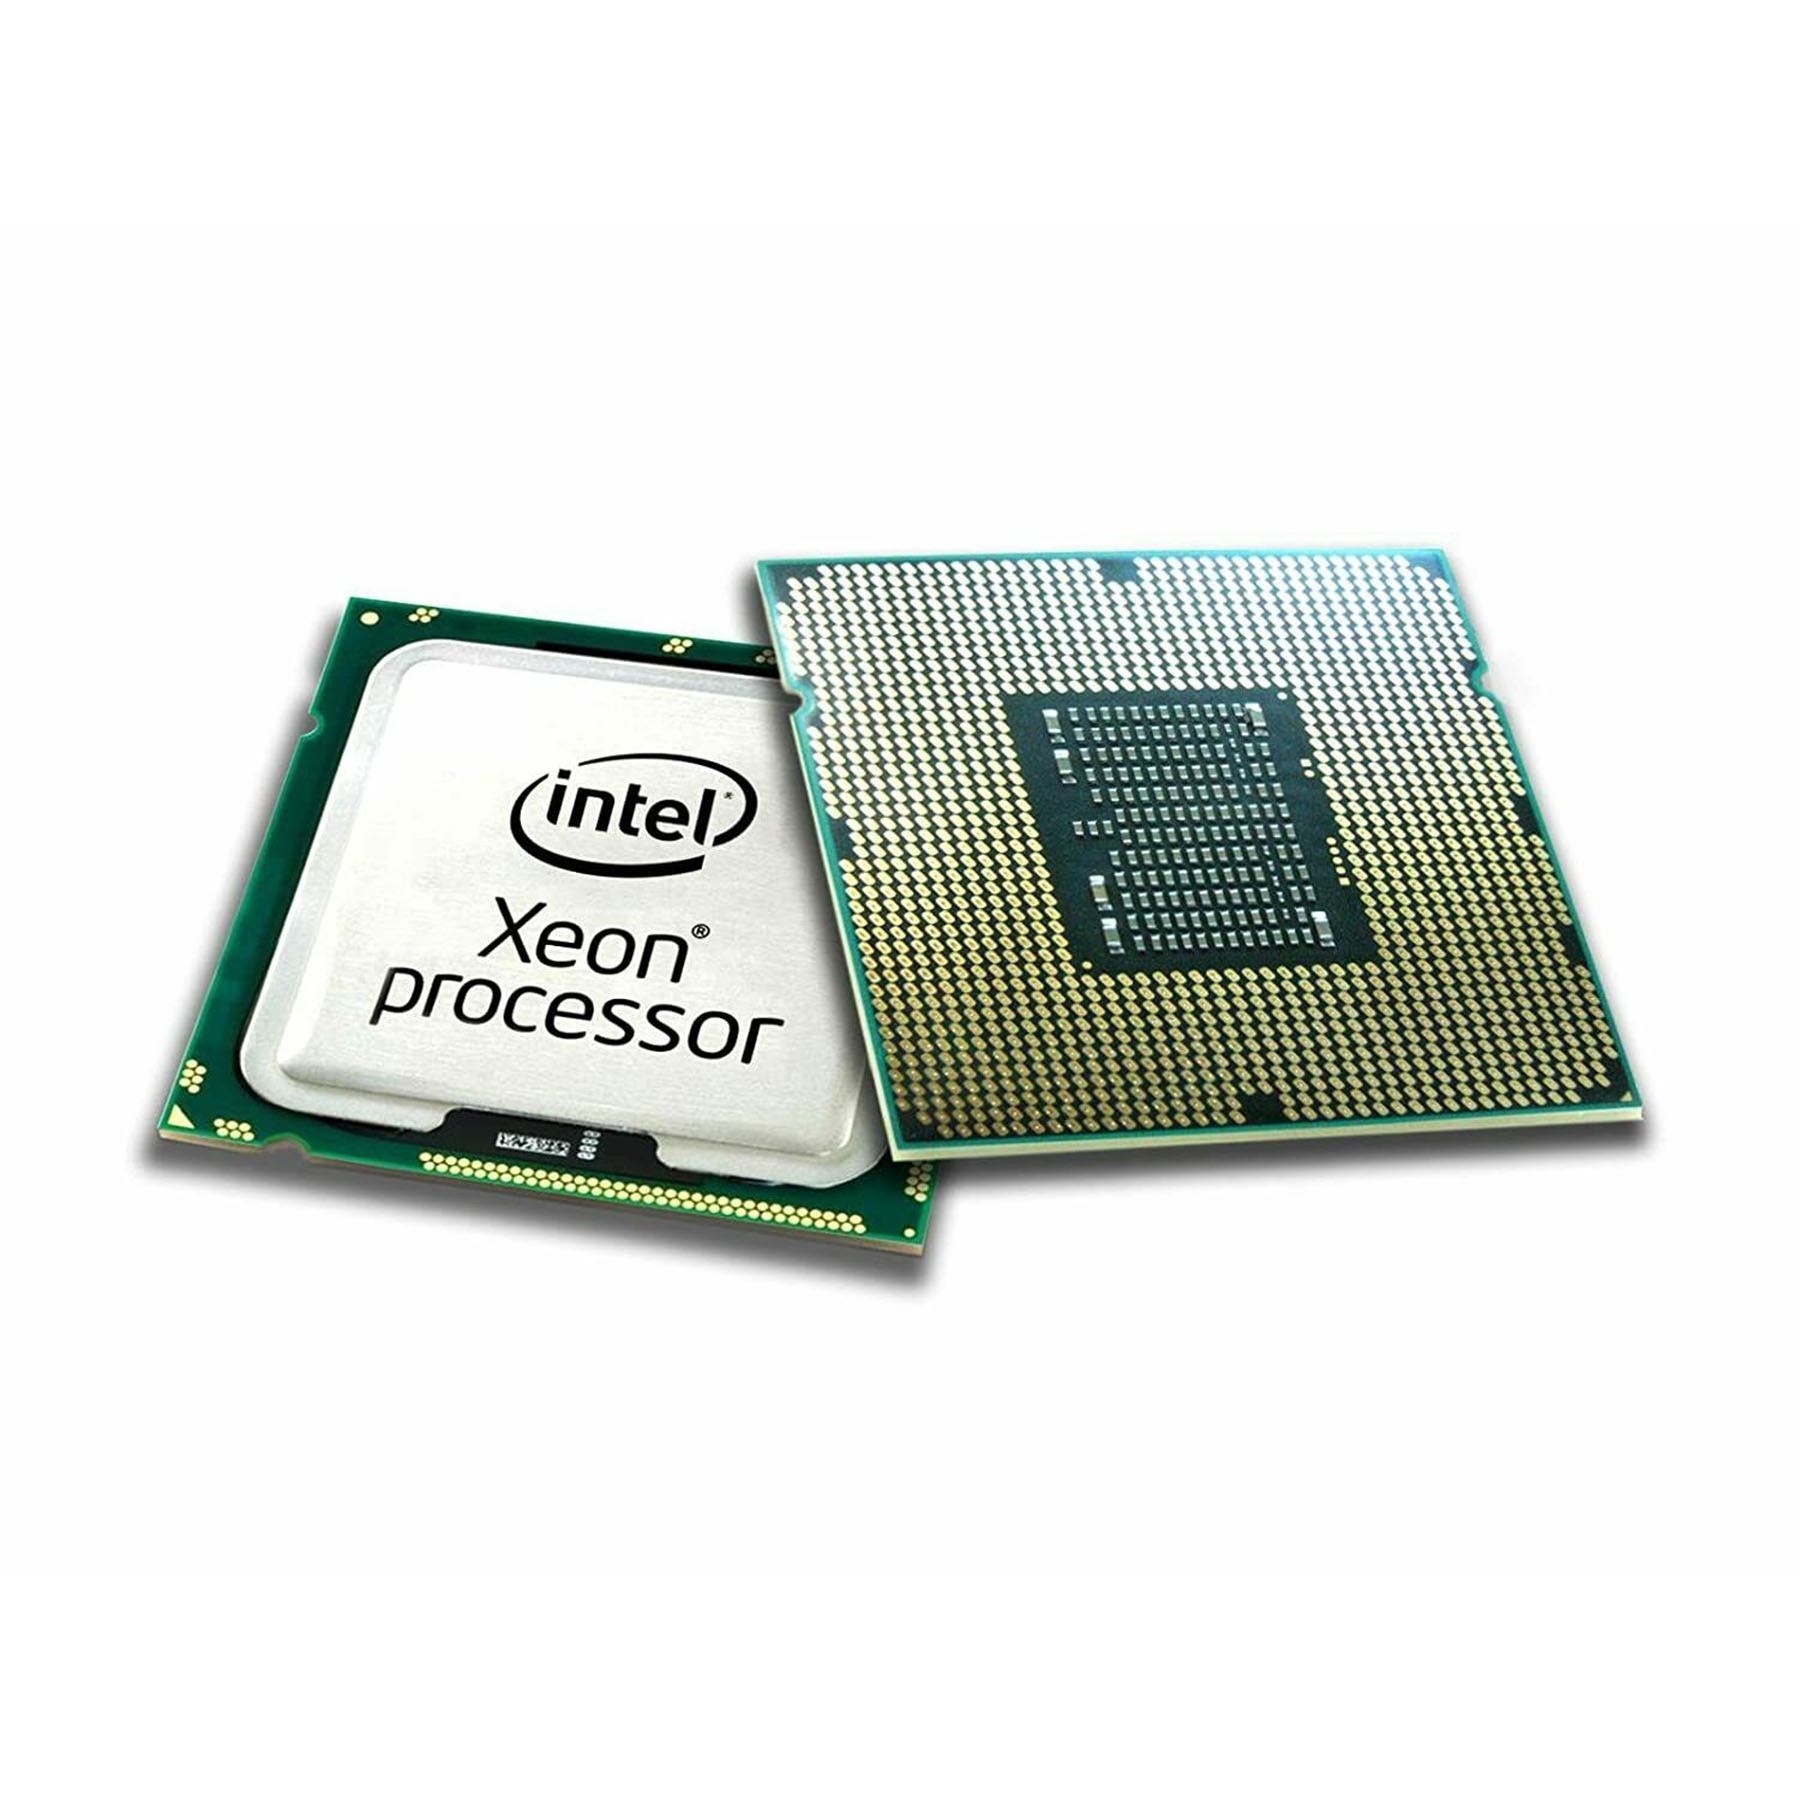 Intel Xeon X5675 3.06GHz 6 Core Server CPU - SLBYL - MATCHED PAIR - Fox